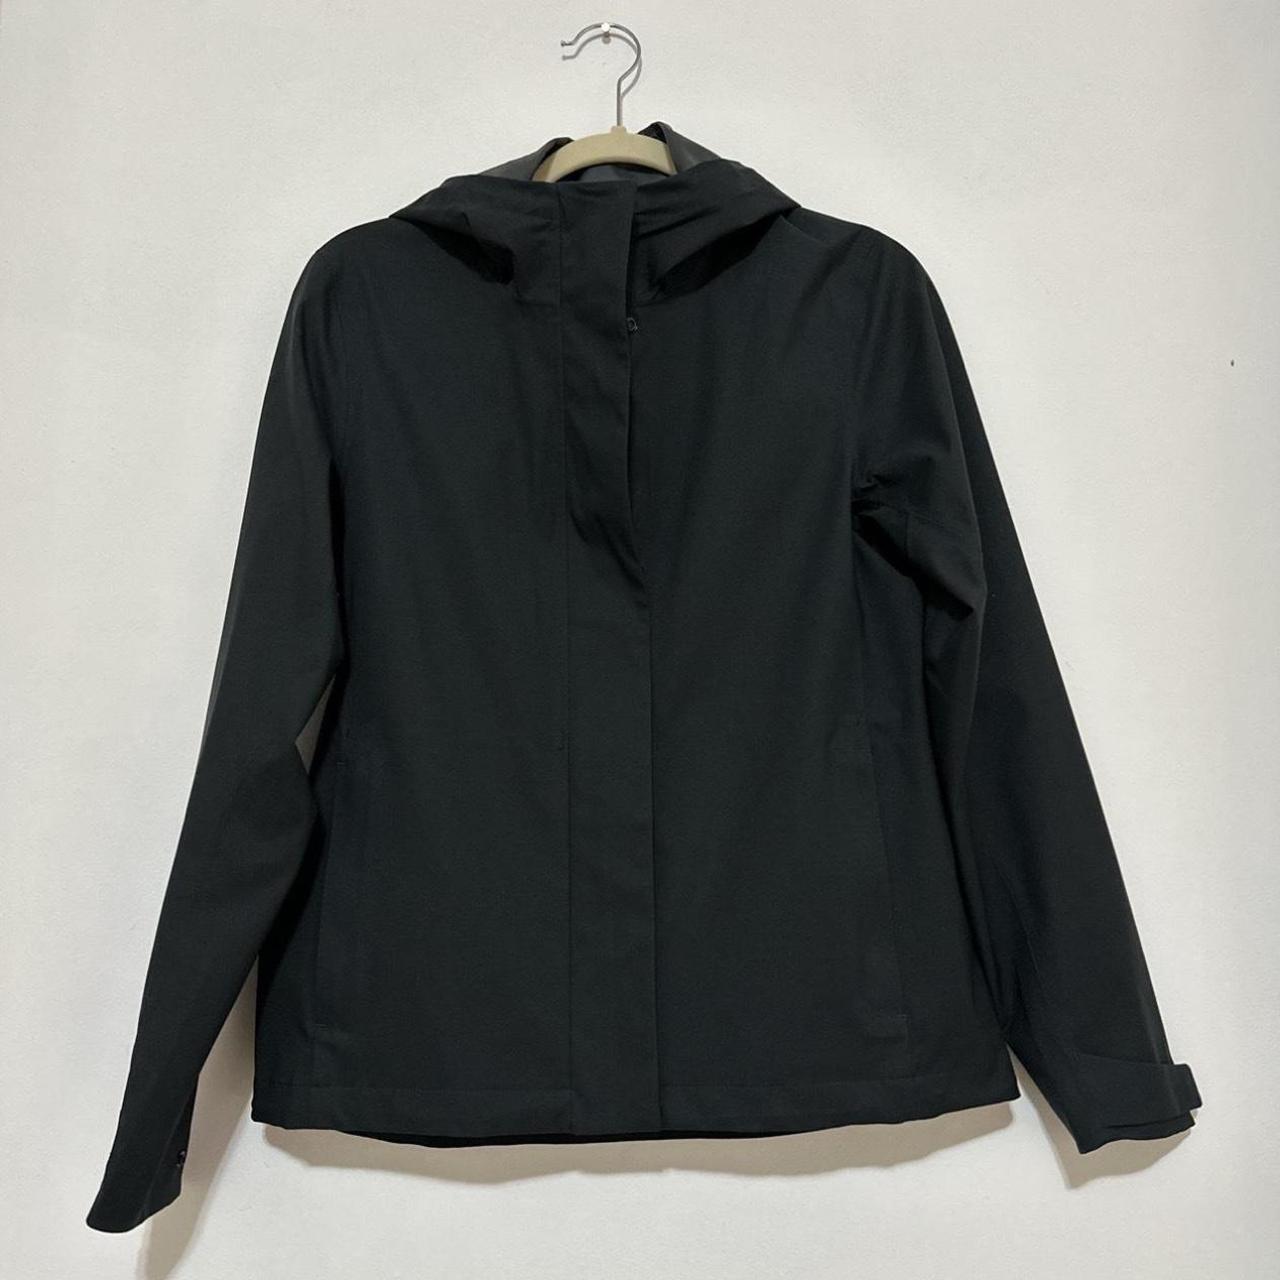 Uniqlo blocktech jacket perfect condition size... - Depop